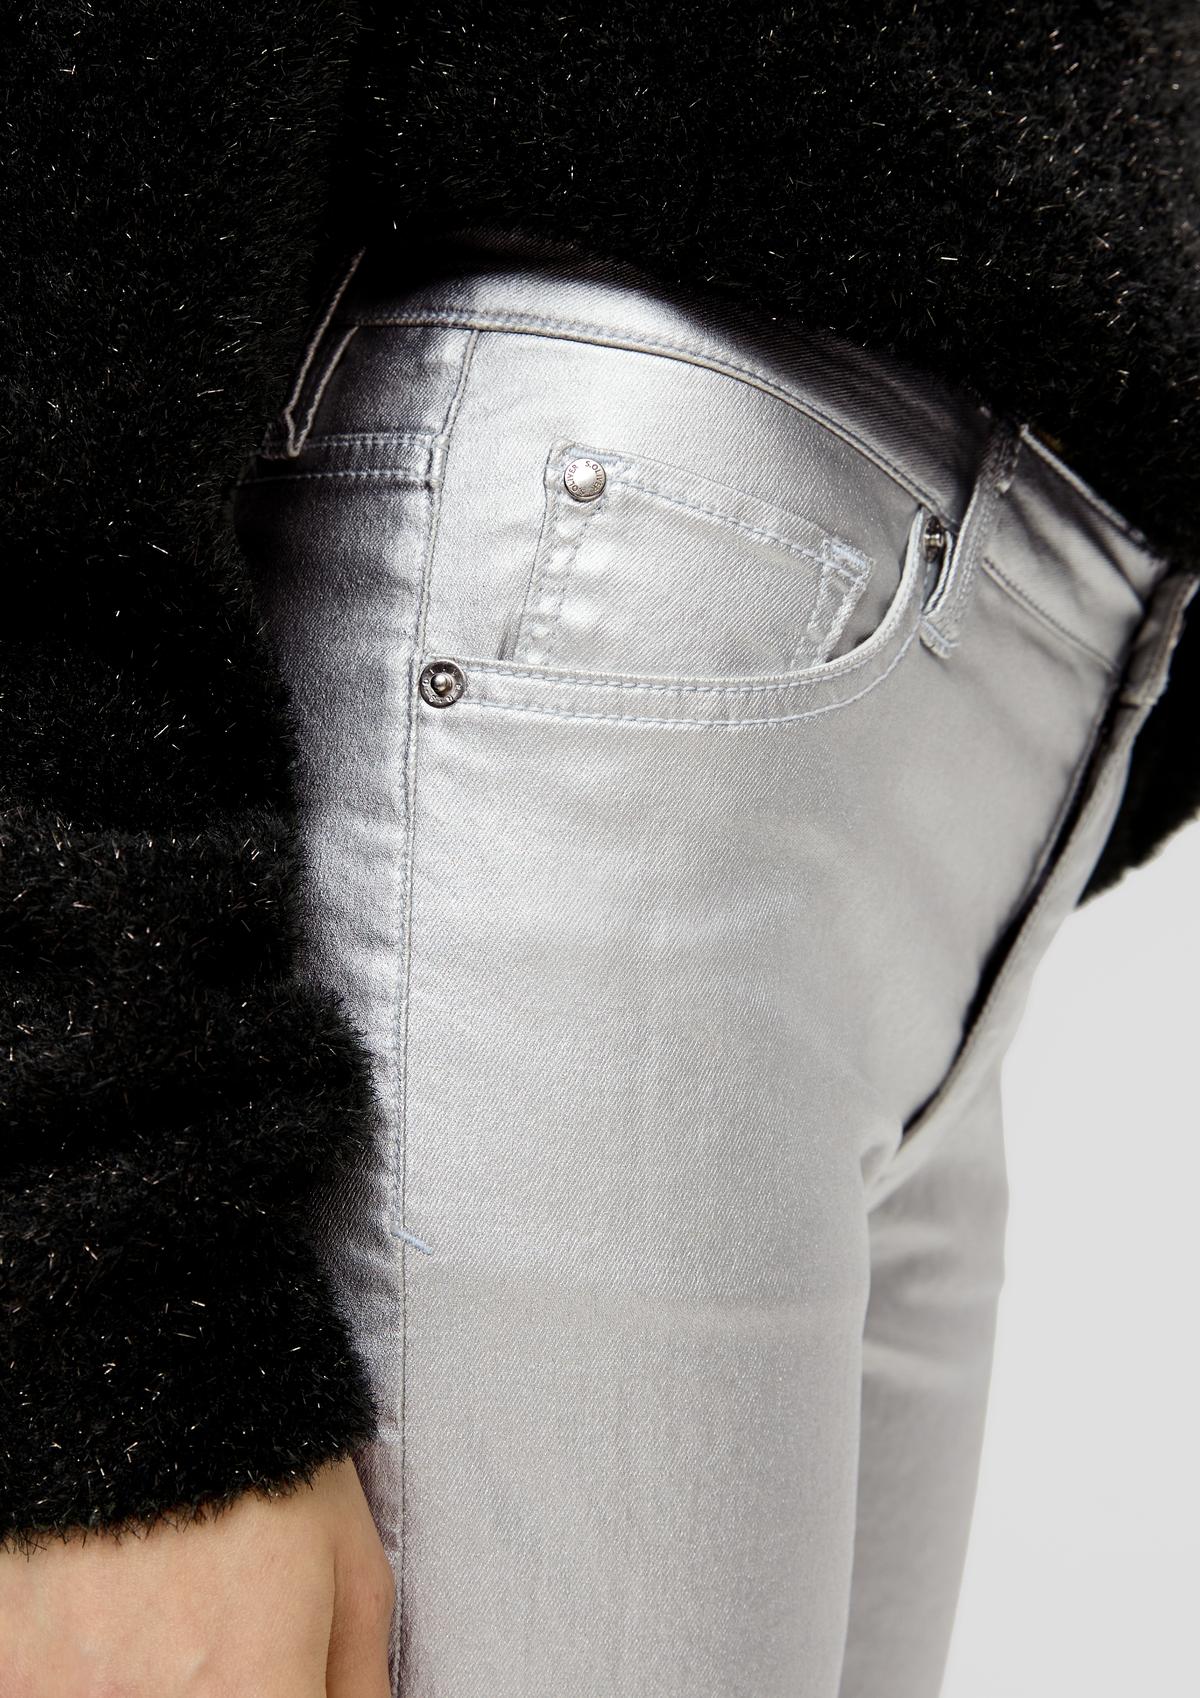 s.Oliver Karolin jeans / regular fit / mid rise / straight leg / metallic